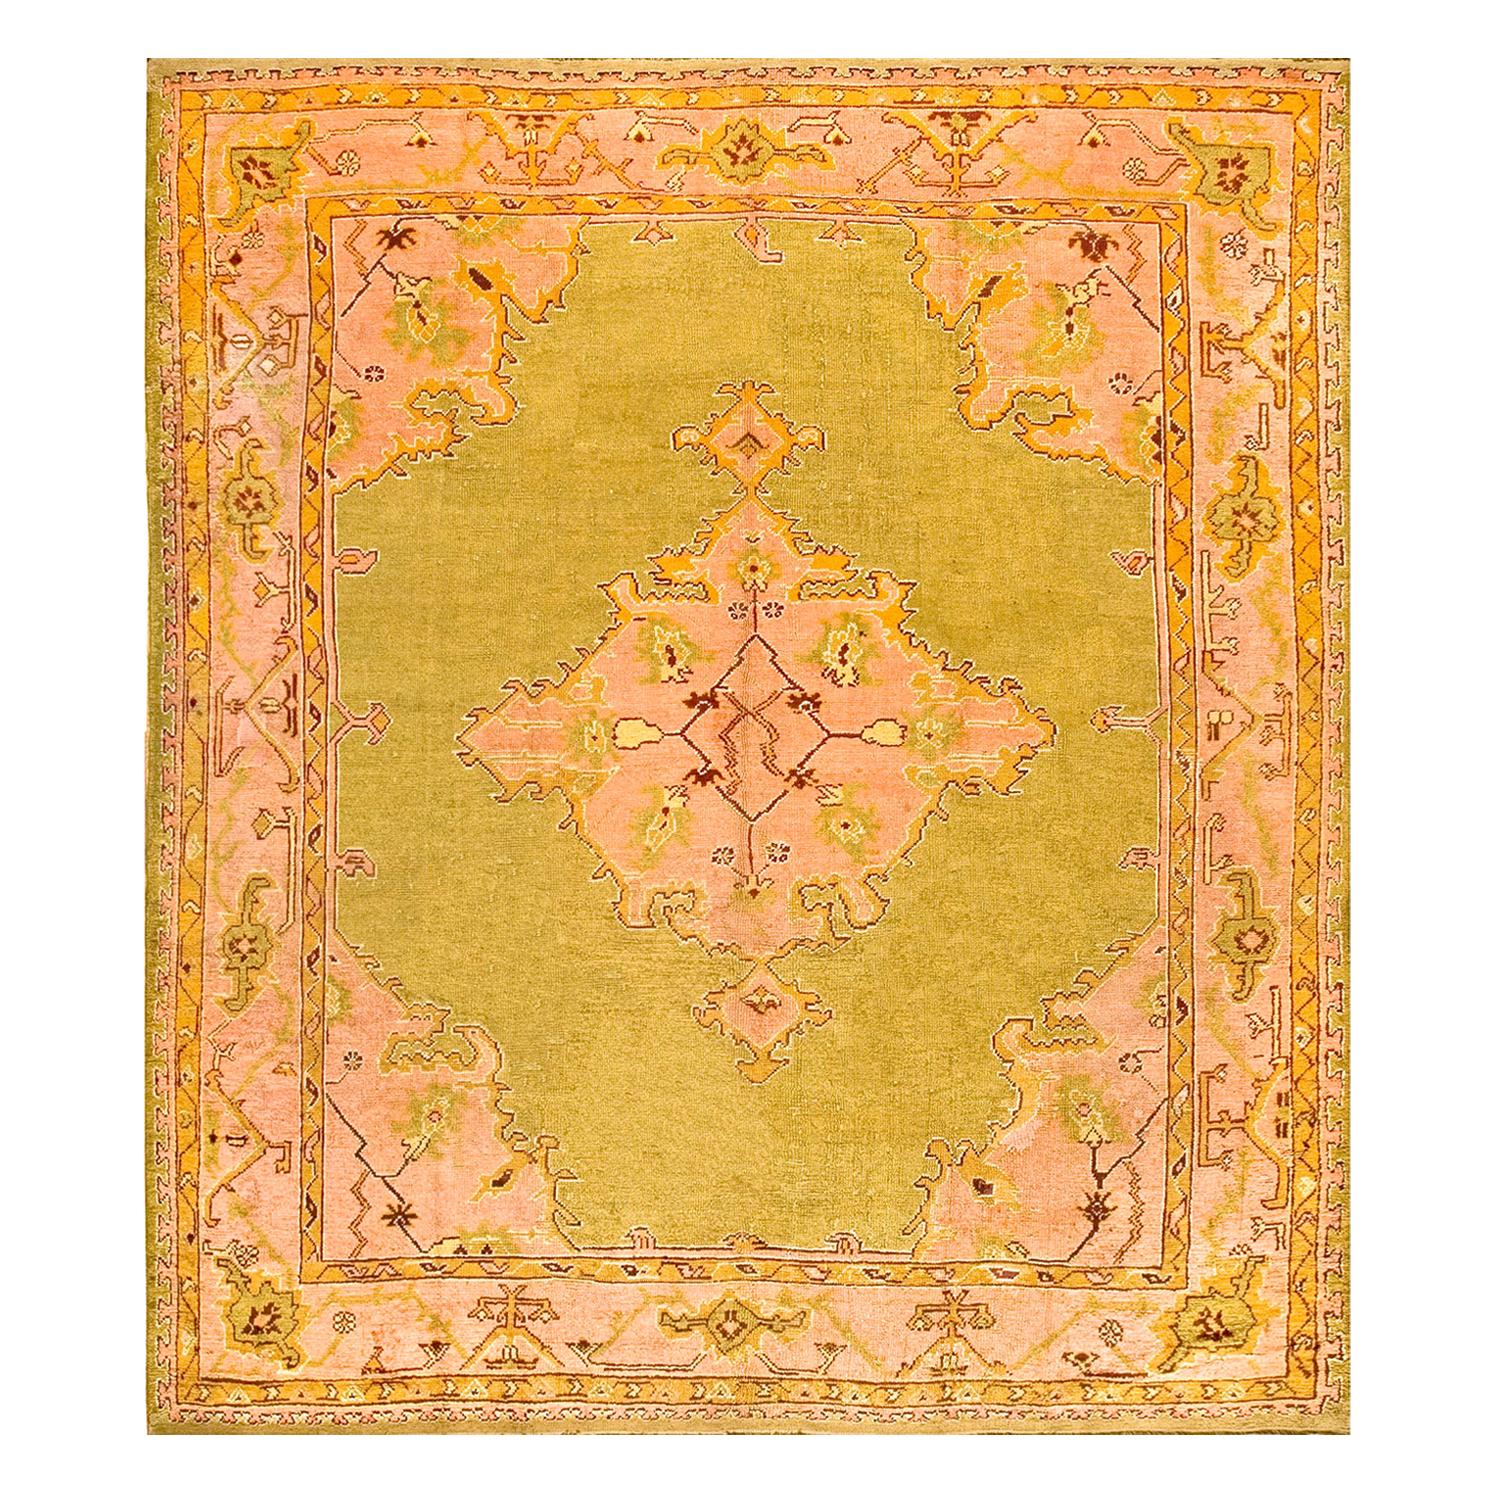 Early 20th Century Turkish Oushak Carpet ( 10'8" x 11'10" - 325 x 360 )